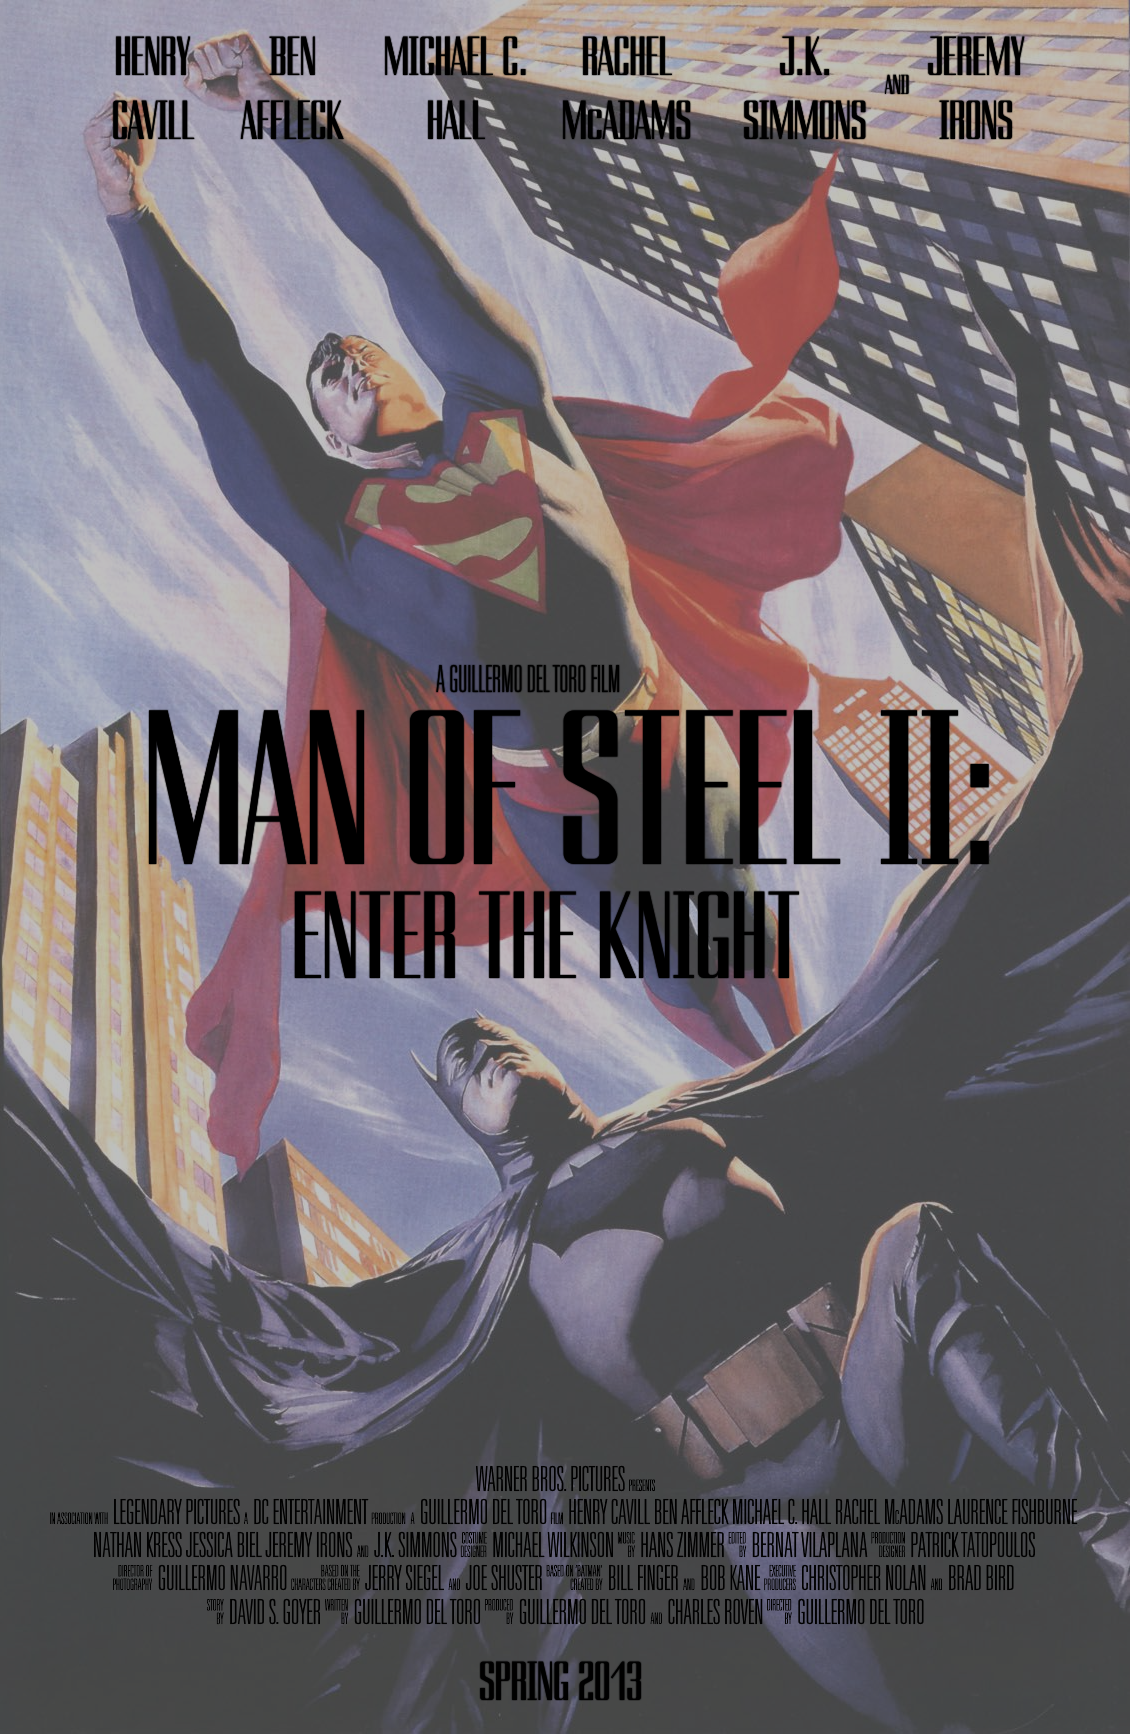 Man of Steel II: Enter the Knight, The DCEU Redux Wiki